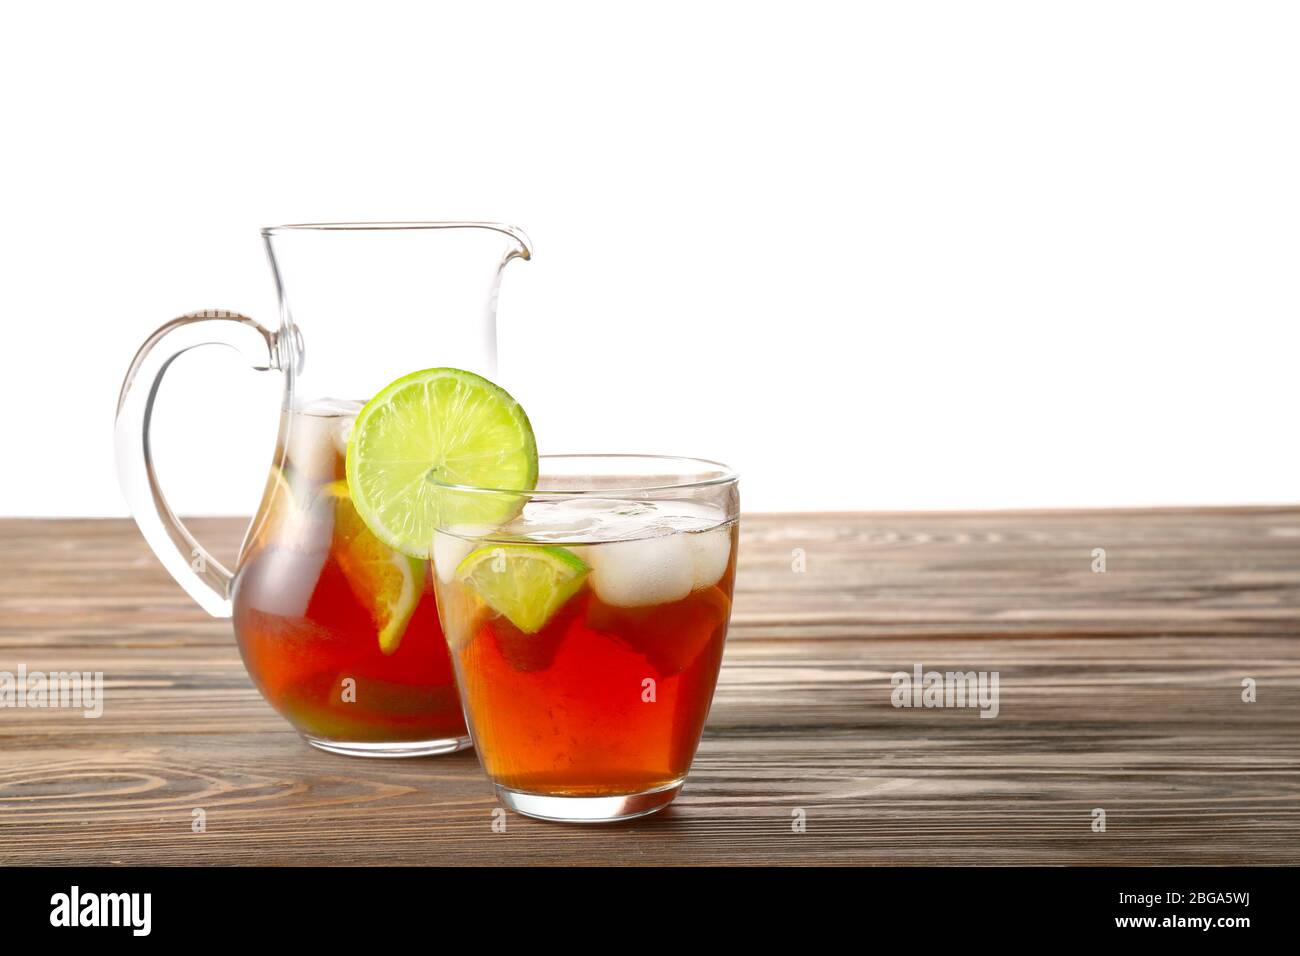 https://c8.alamy.com/comp/2BGA5WJ/glass-and-jug-of-tasty-cold-ice-tea-on-table-against-white-background-2BGA5WJ.jpg